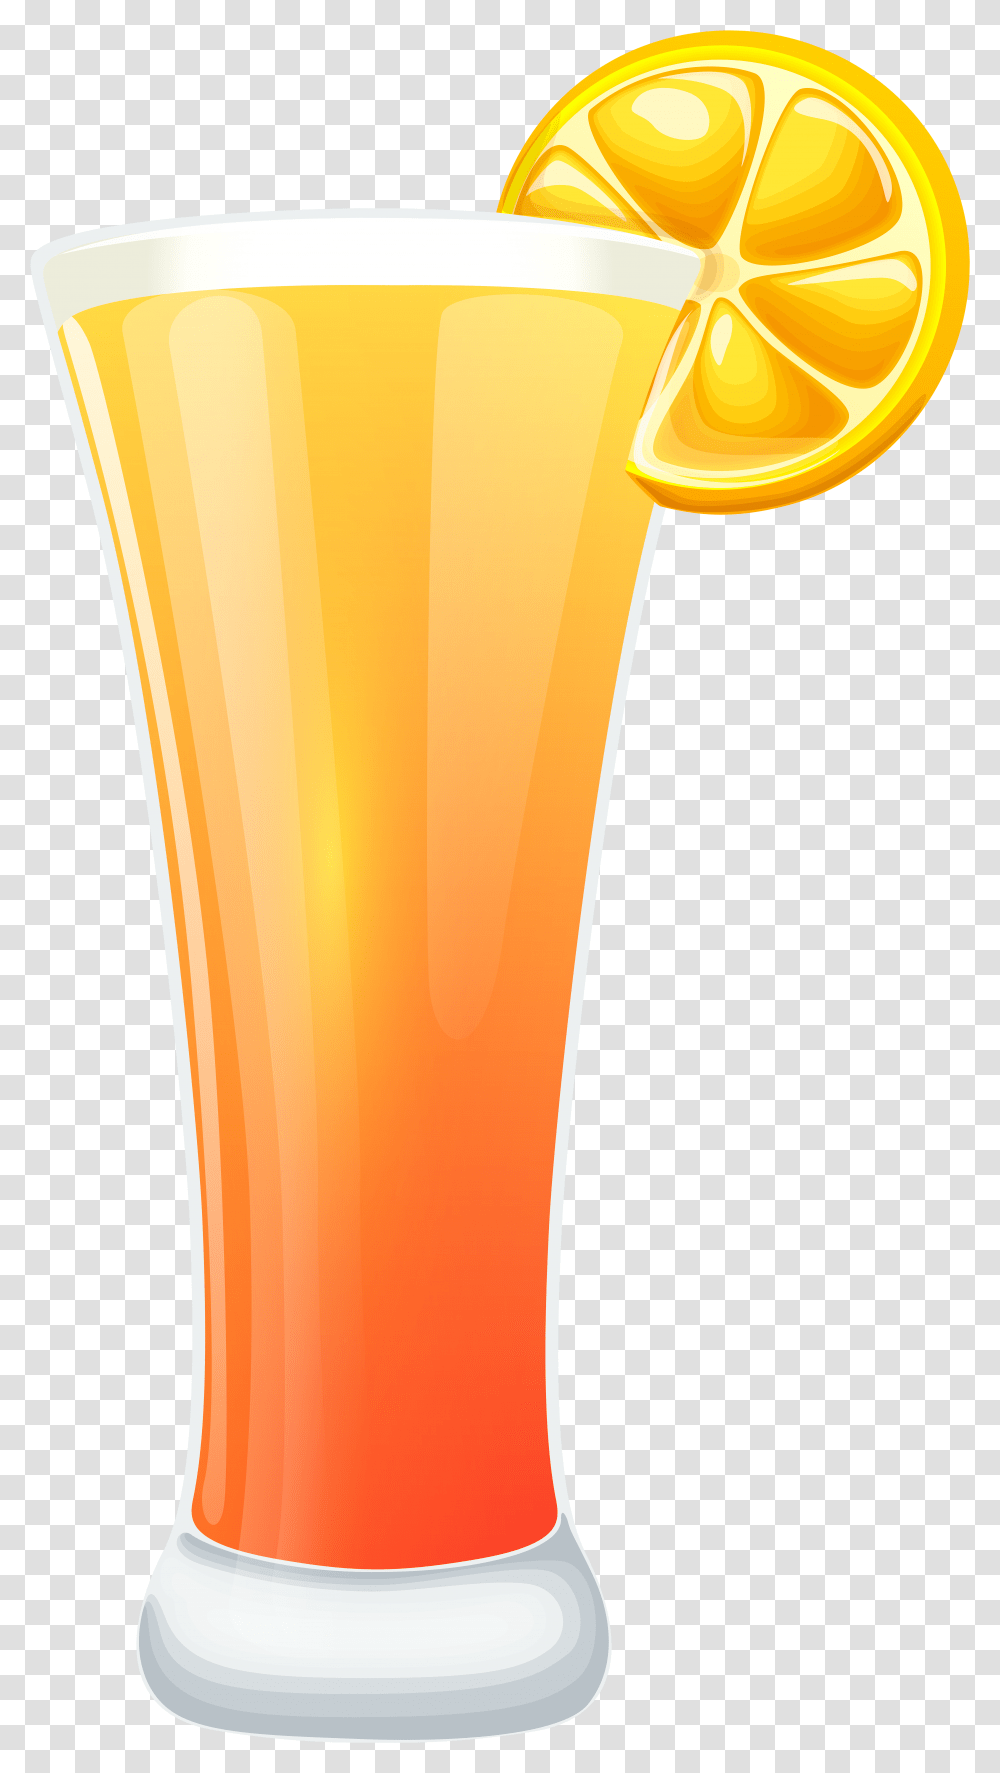 Orange Juice Clip Art Gallery Yopriceville Orange Juice Clipart, Beverage, Drink, Glass, Alcohol Transparent Png